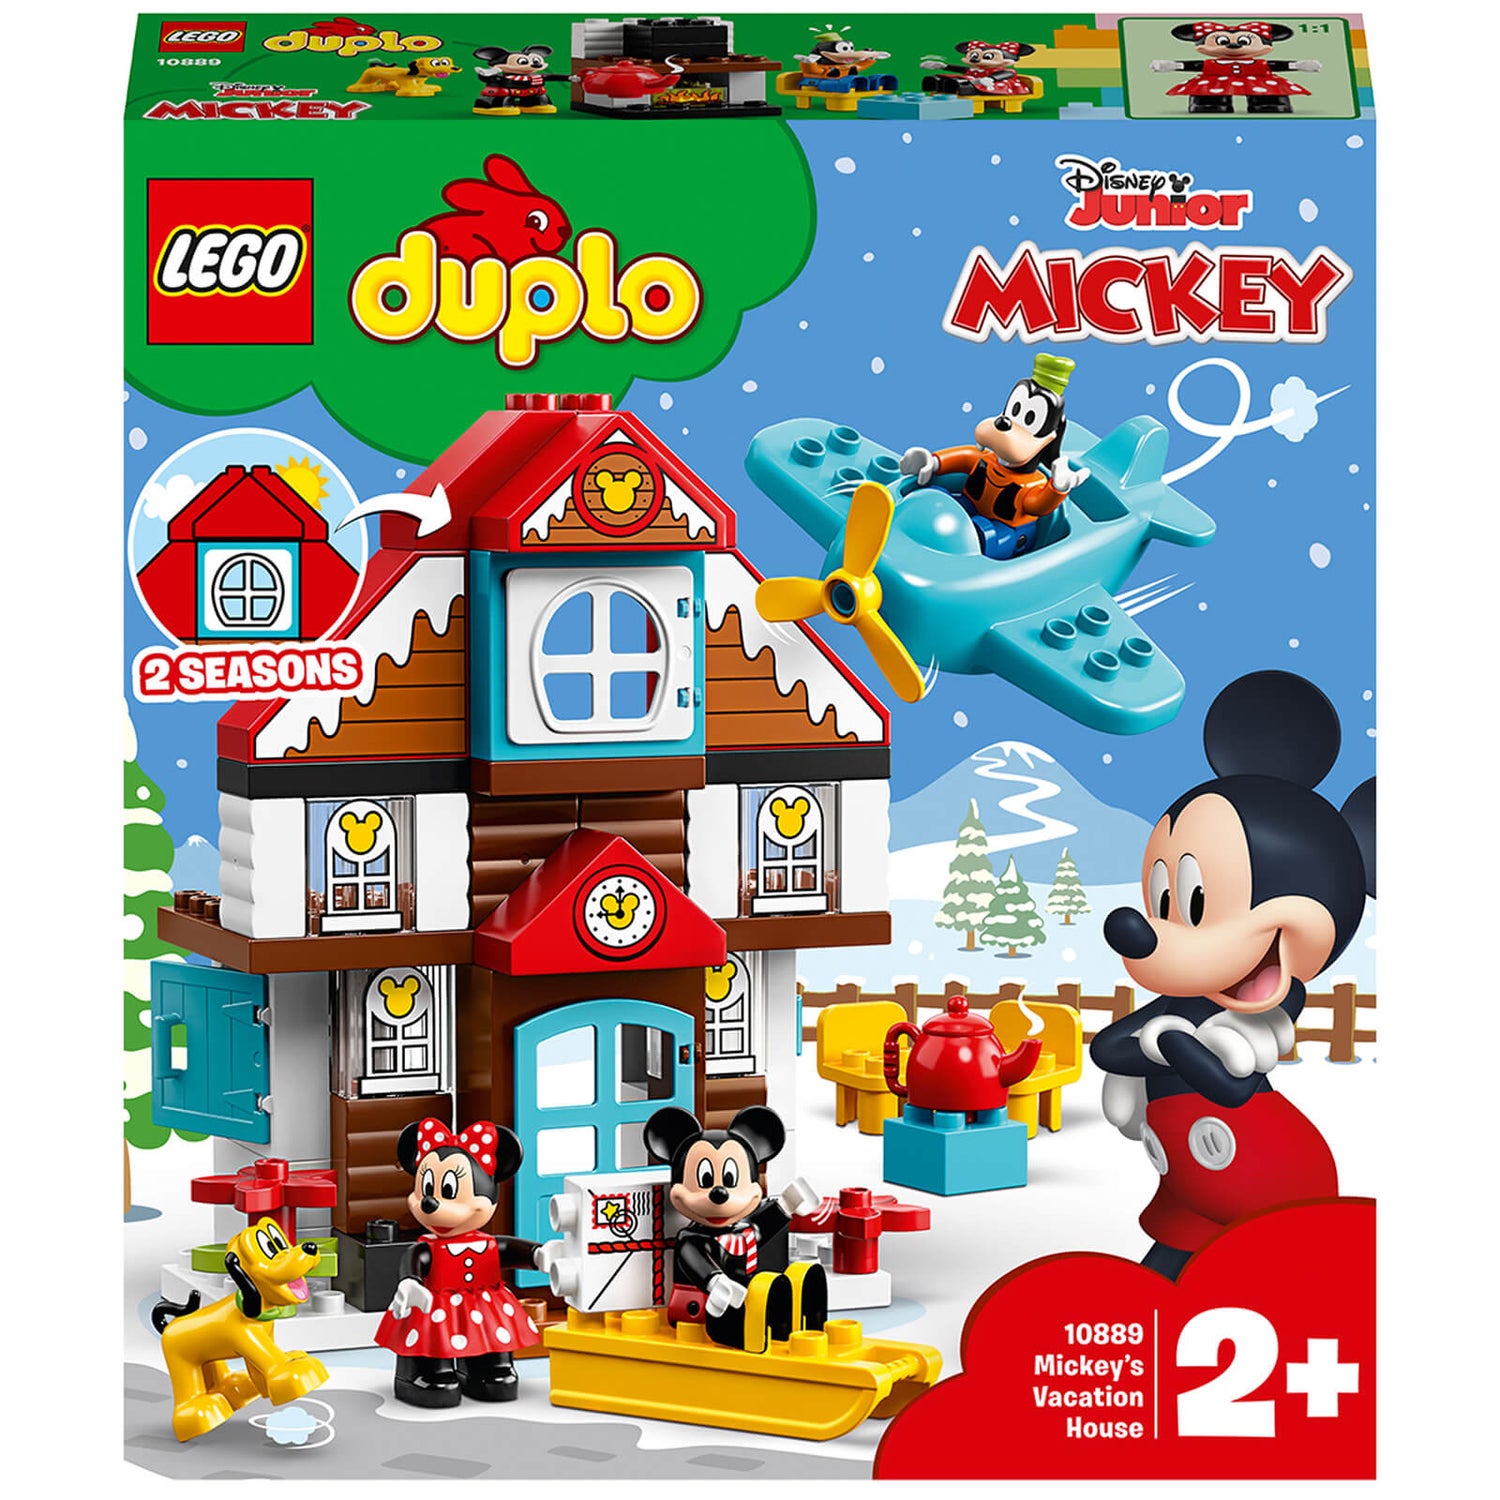 Scully motivet salt LEGO DUPLO Disney: Mickey's Vacation House Toy (10889) Toys - Zavvi US